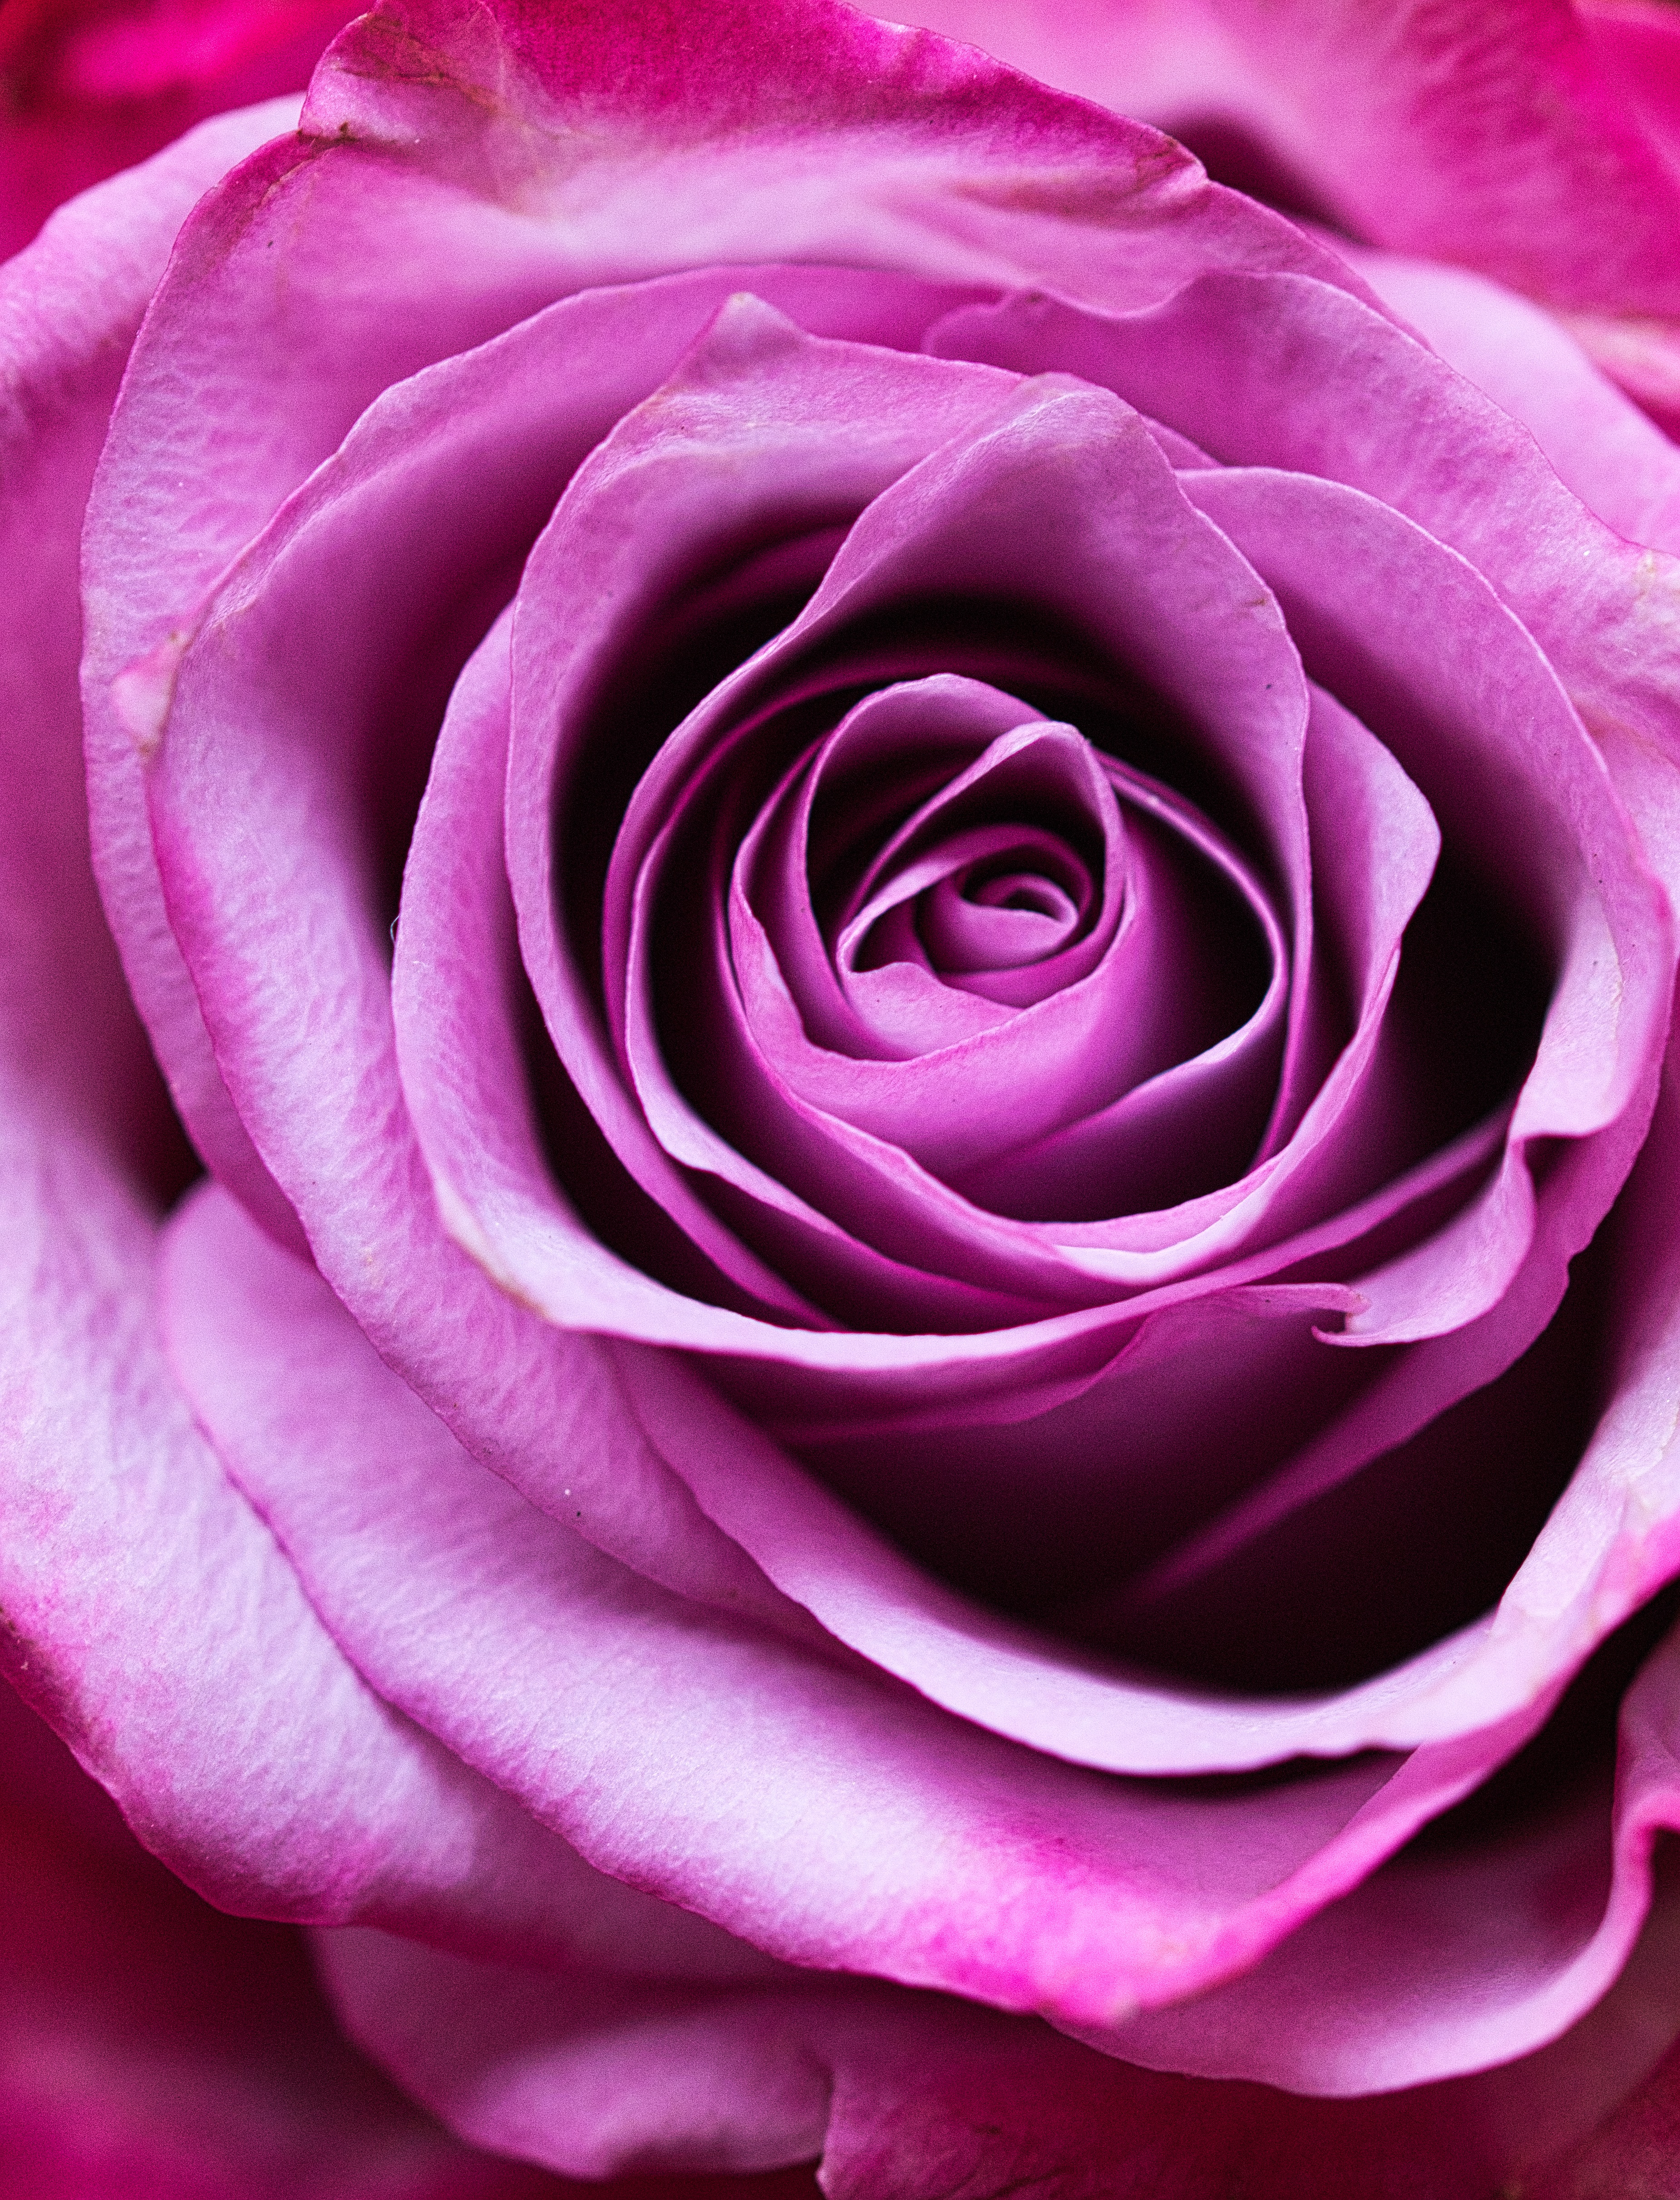 petals, flowers, pink, flower, rose flower, rose, close-up, romance